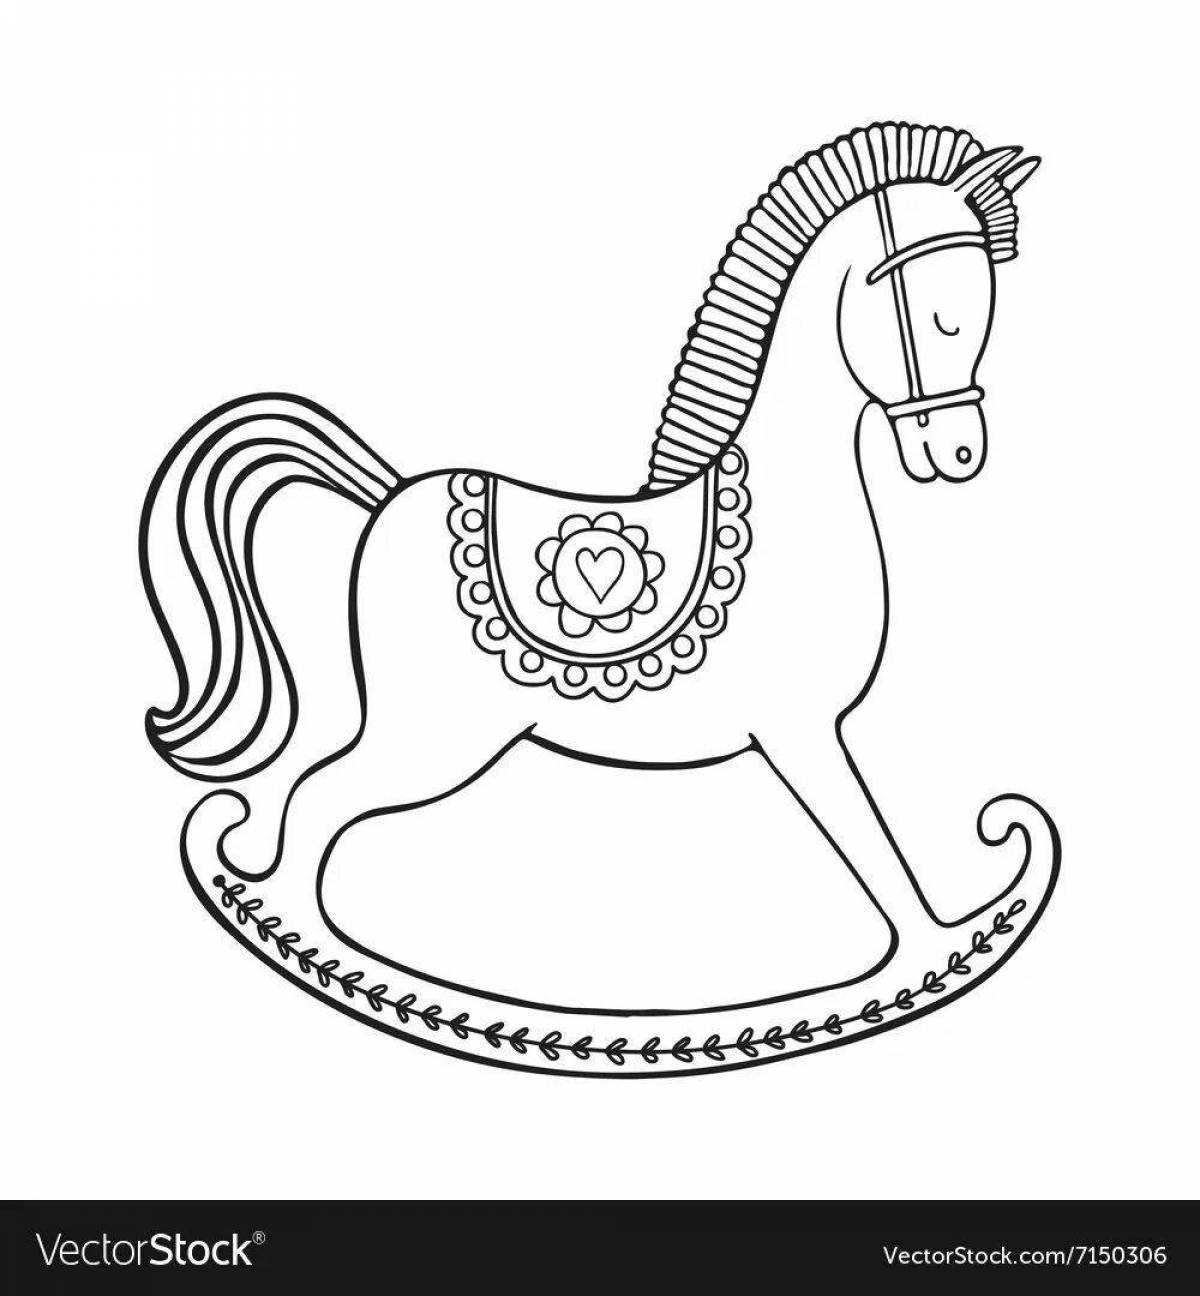 Праздничная раскраска лошадка-качалка